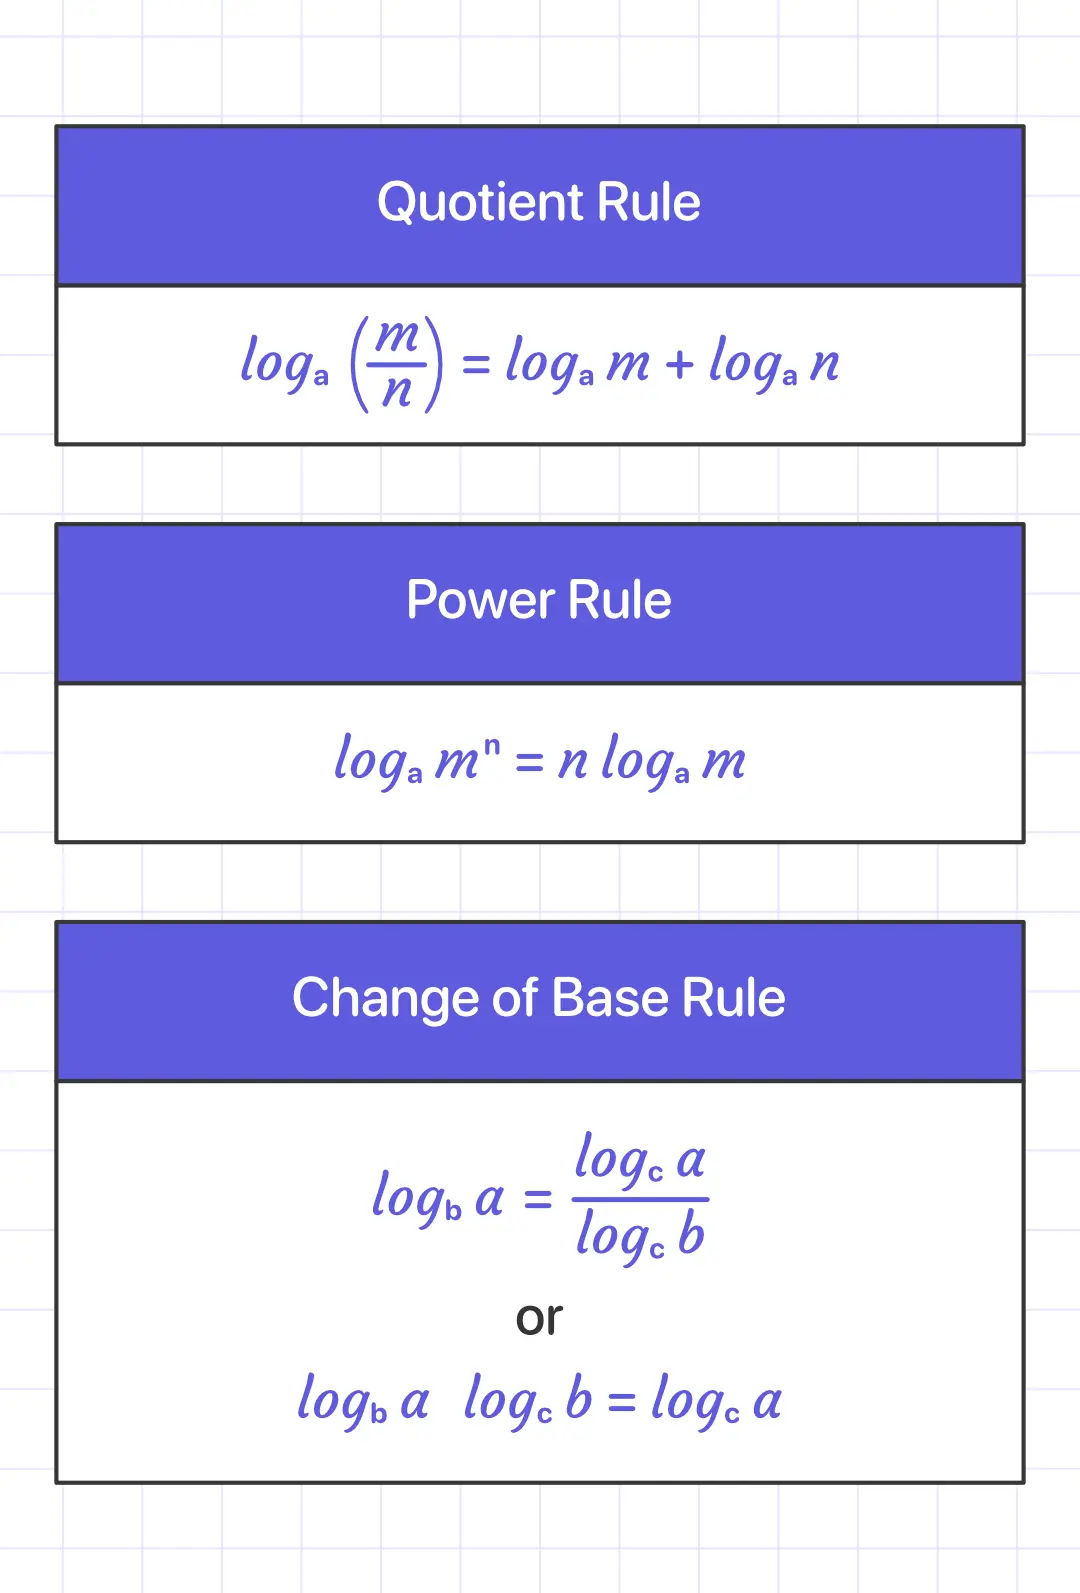 Logarithms rules2